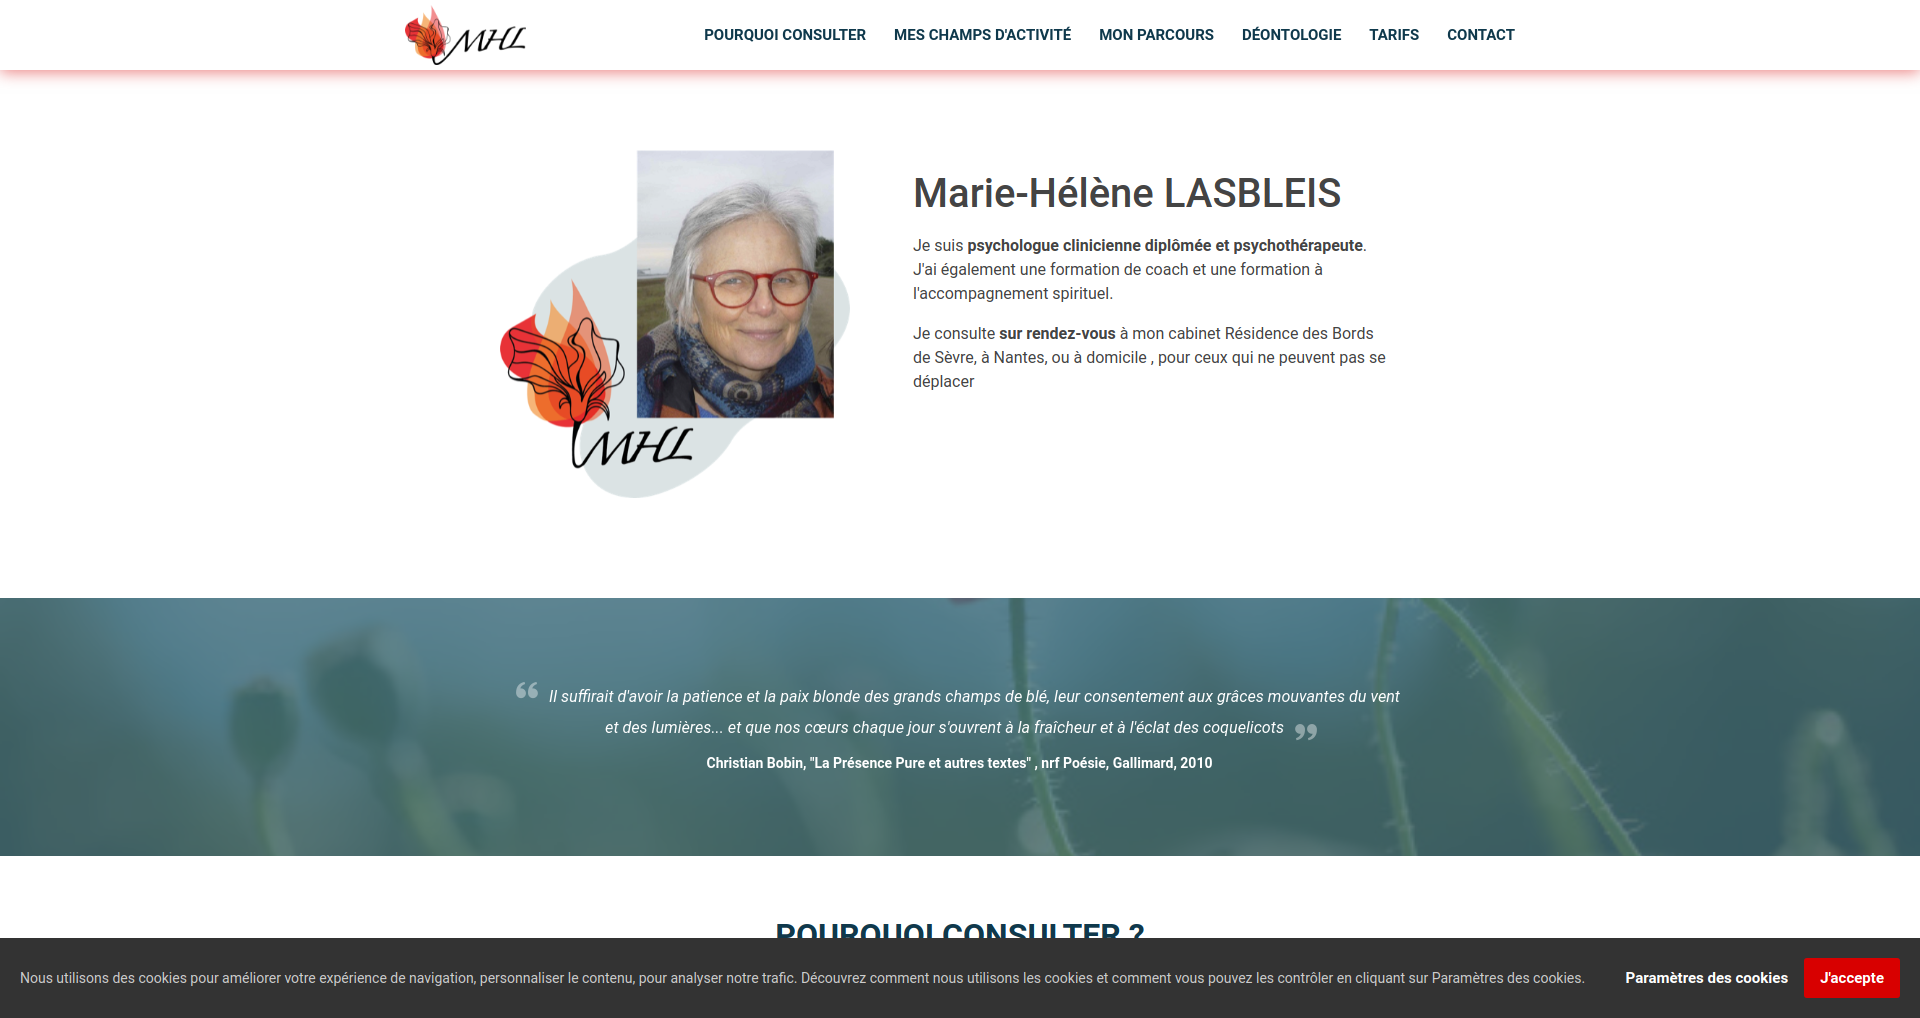 Marie-Hélène Lasbleis